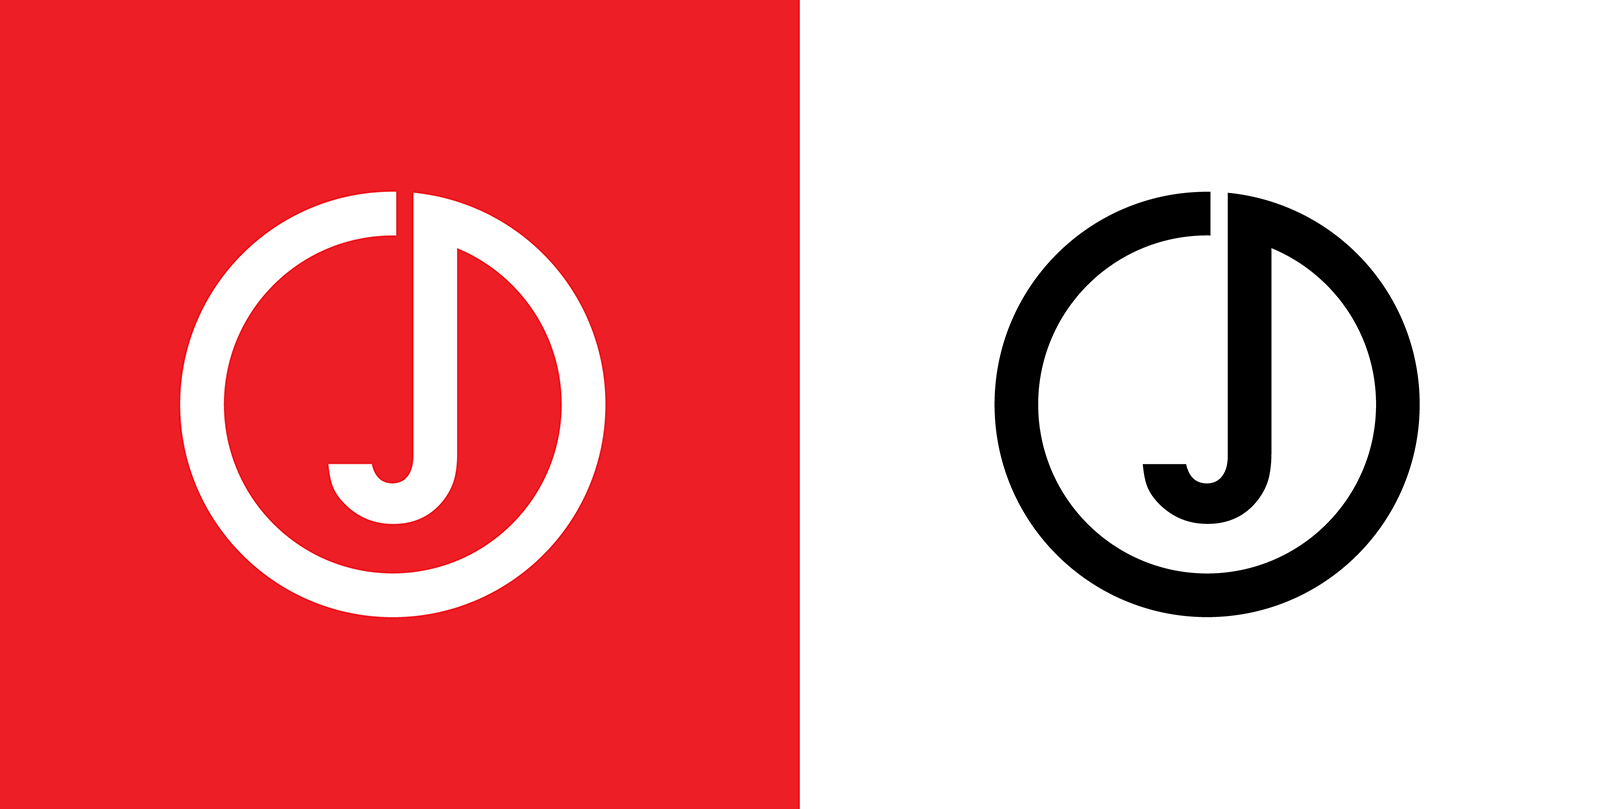 Letter oj, jo abstract company or brand Logo Design